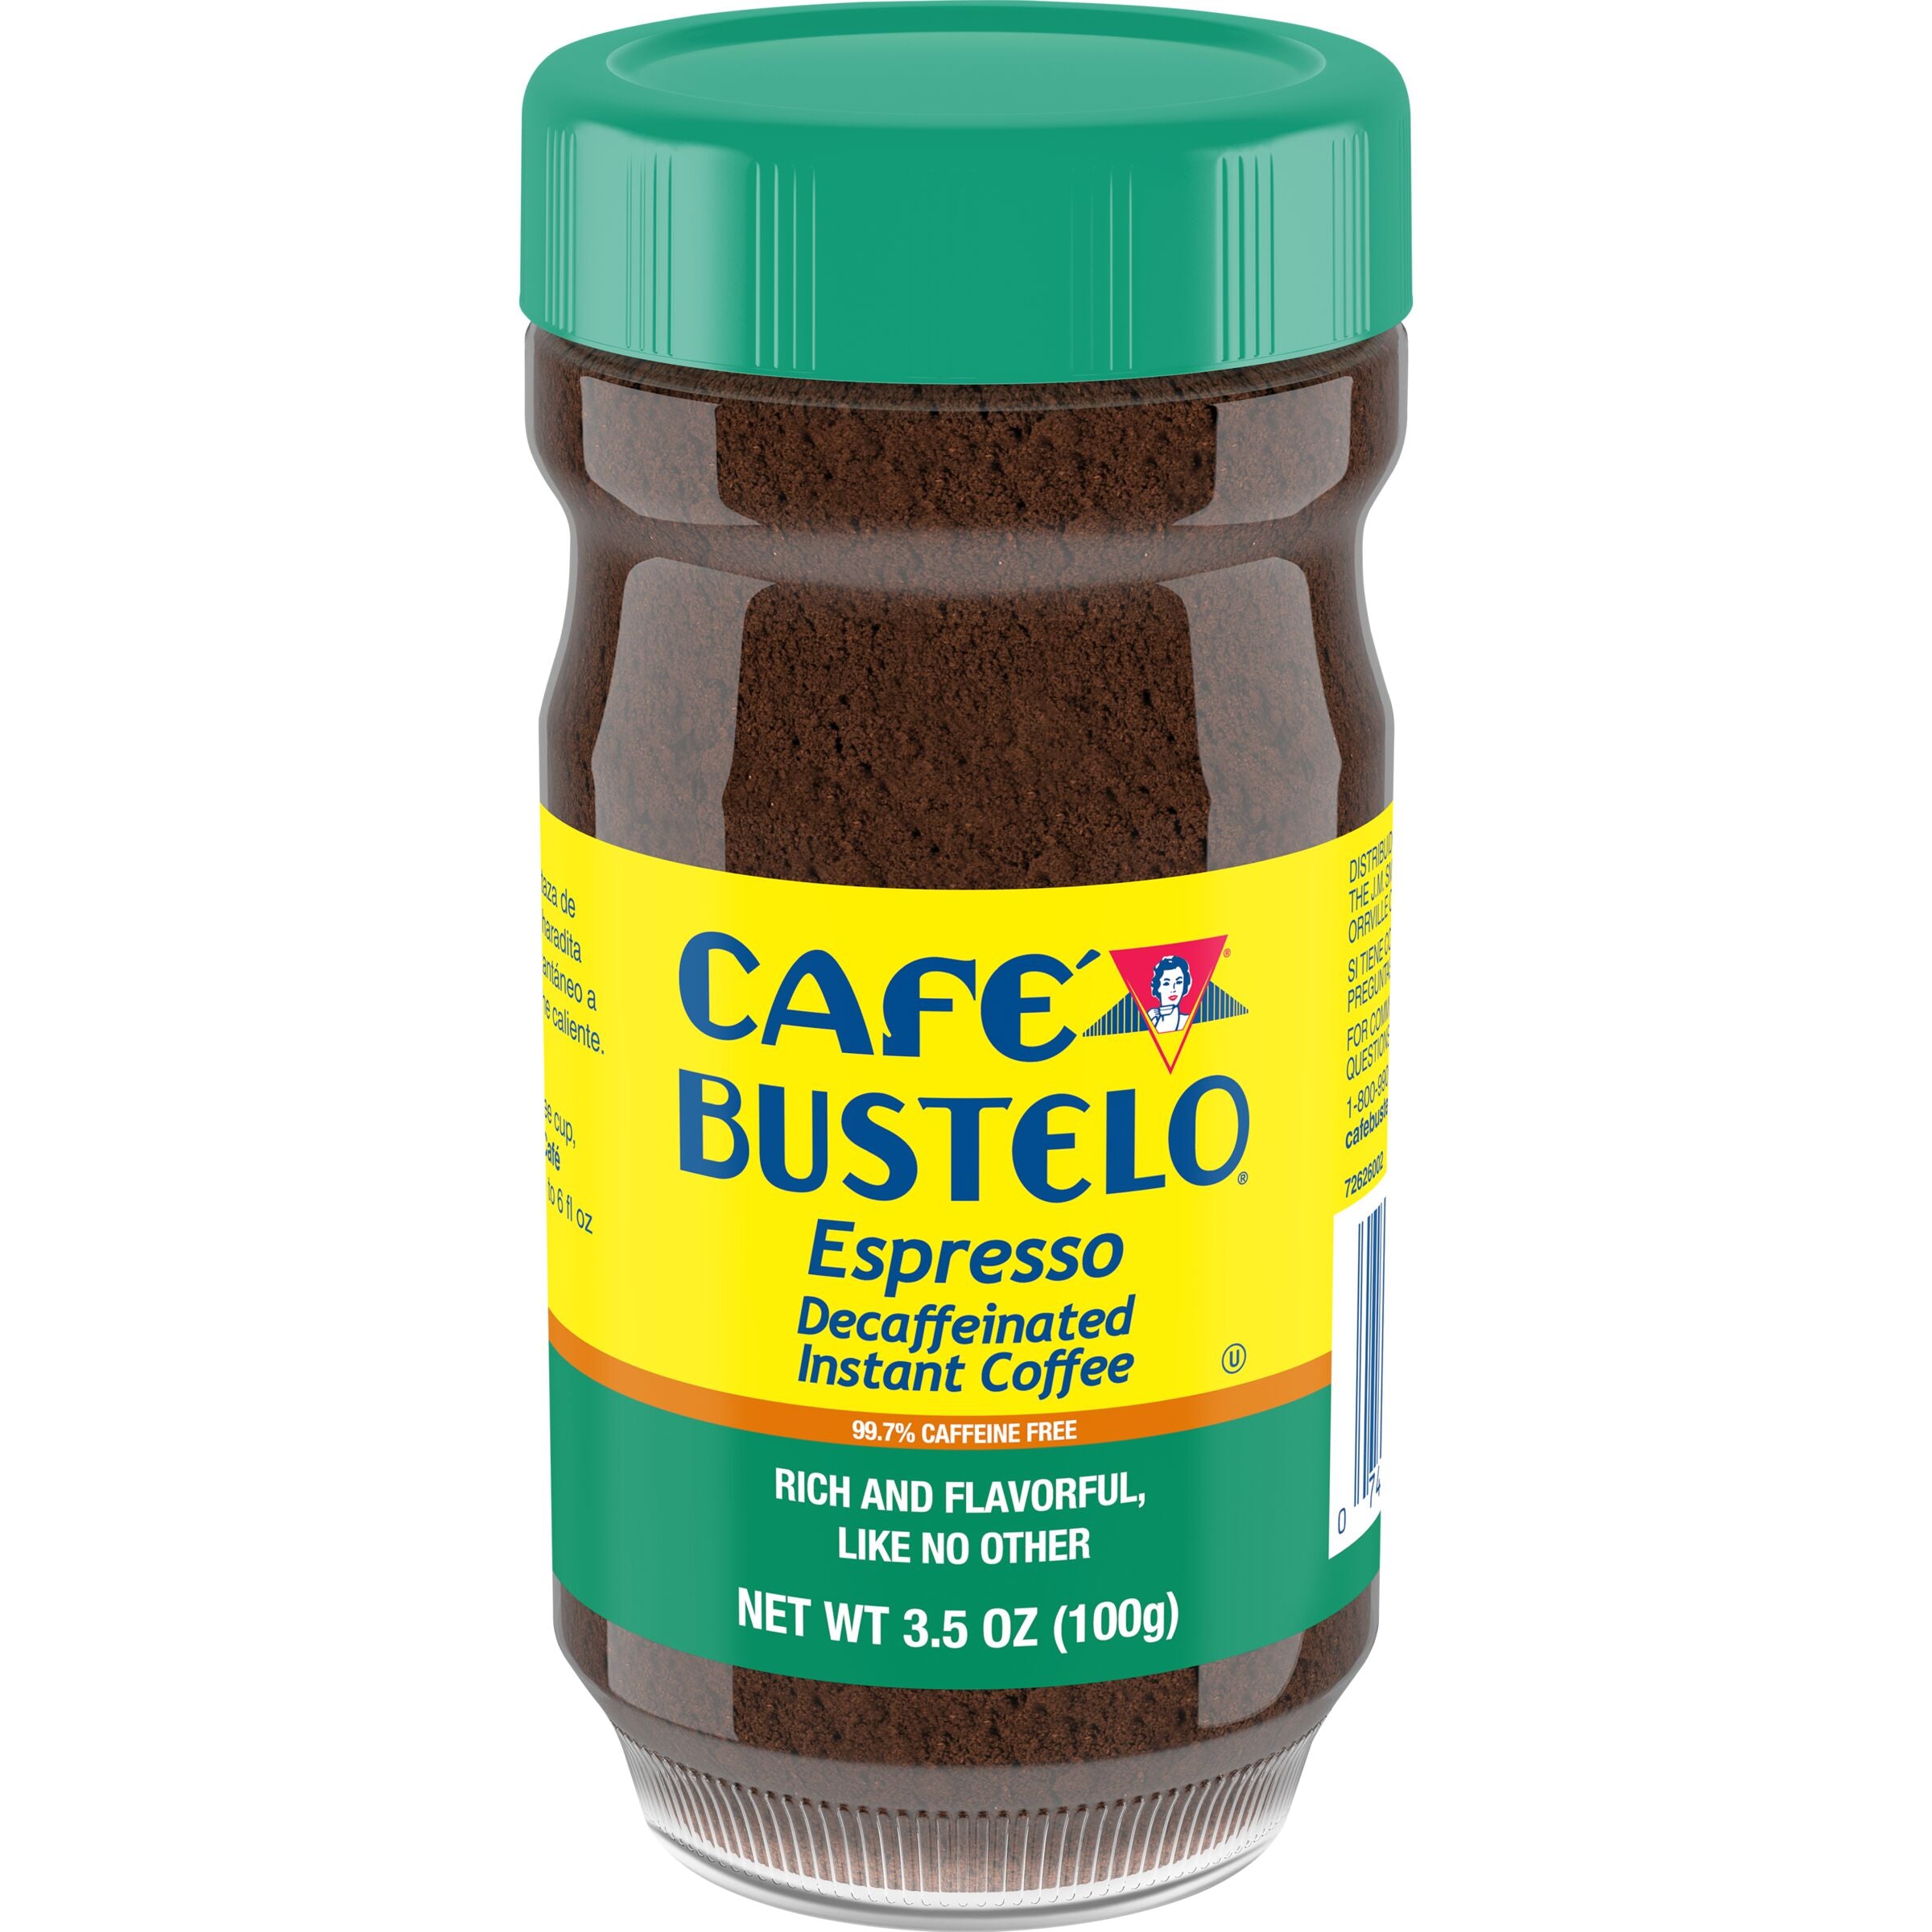 Cafe Bustelo Decaf Espresso Style, Instant Coffee Jar, 3.5 oz